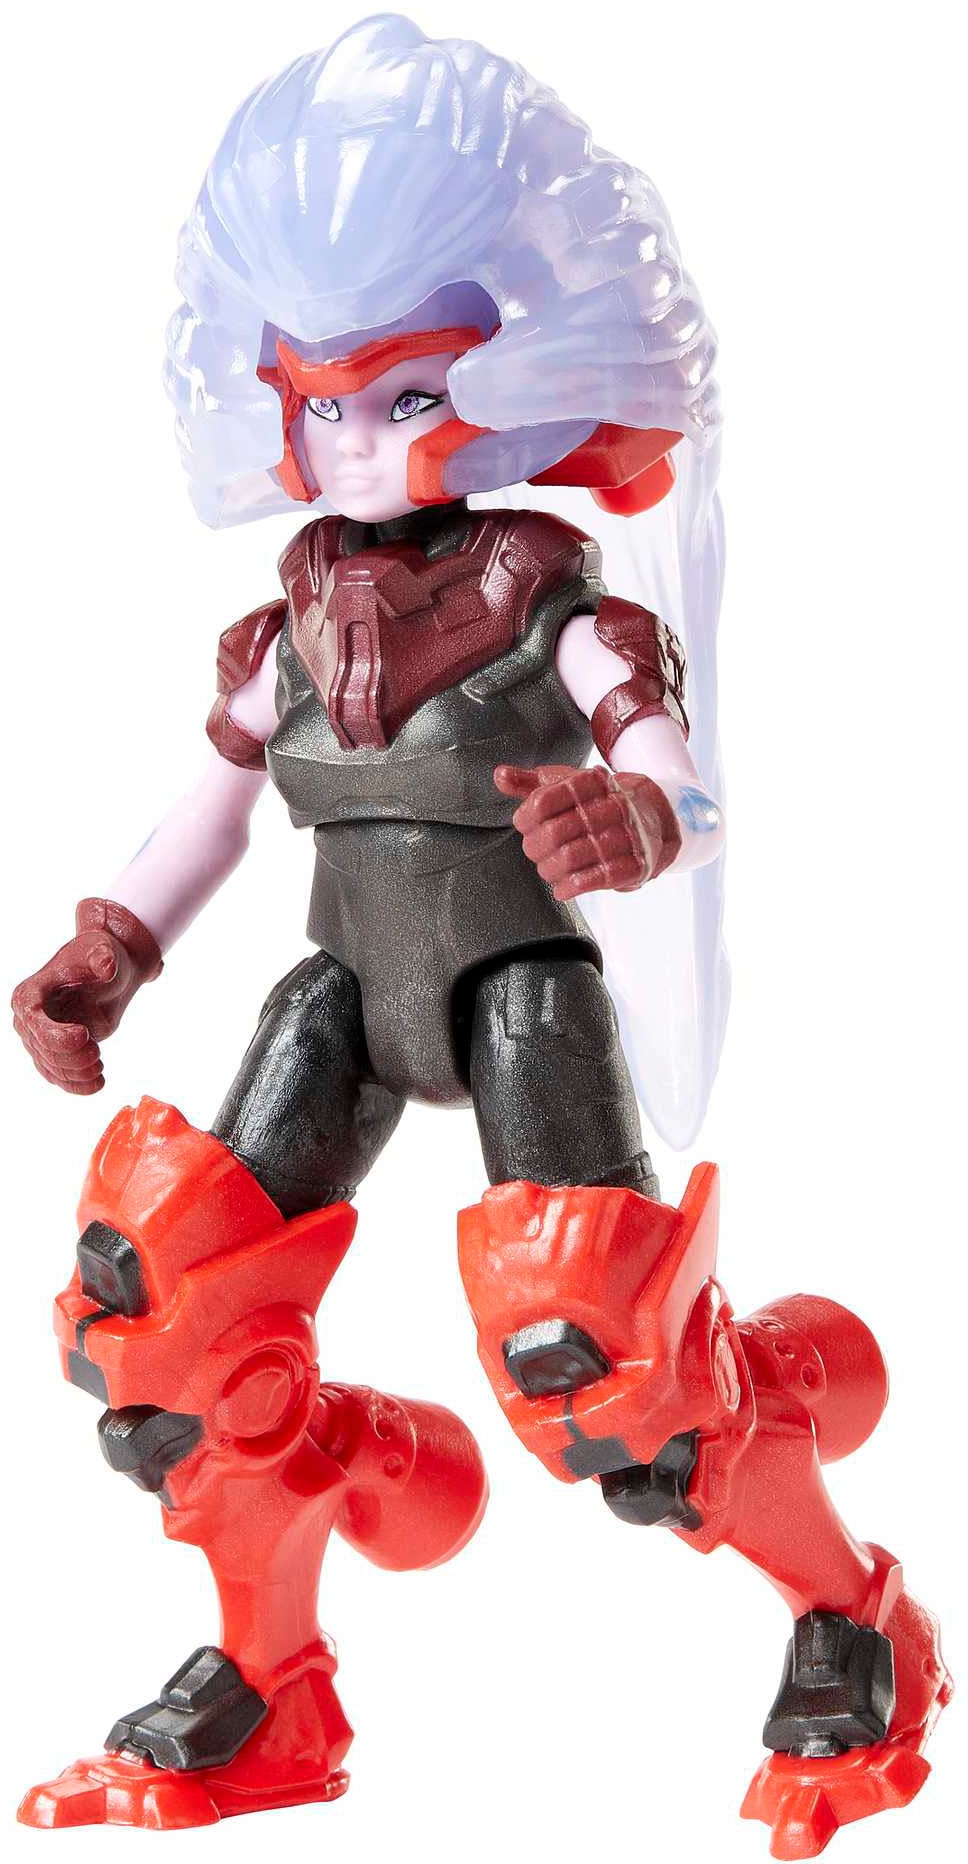 Mattel® Actionfigur »He-Man and the Masters of the Universe Ram Ma-am«, basierend auf der Zeichentrickserie